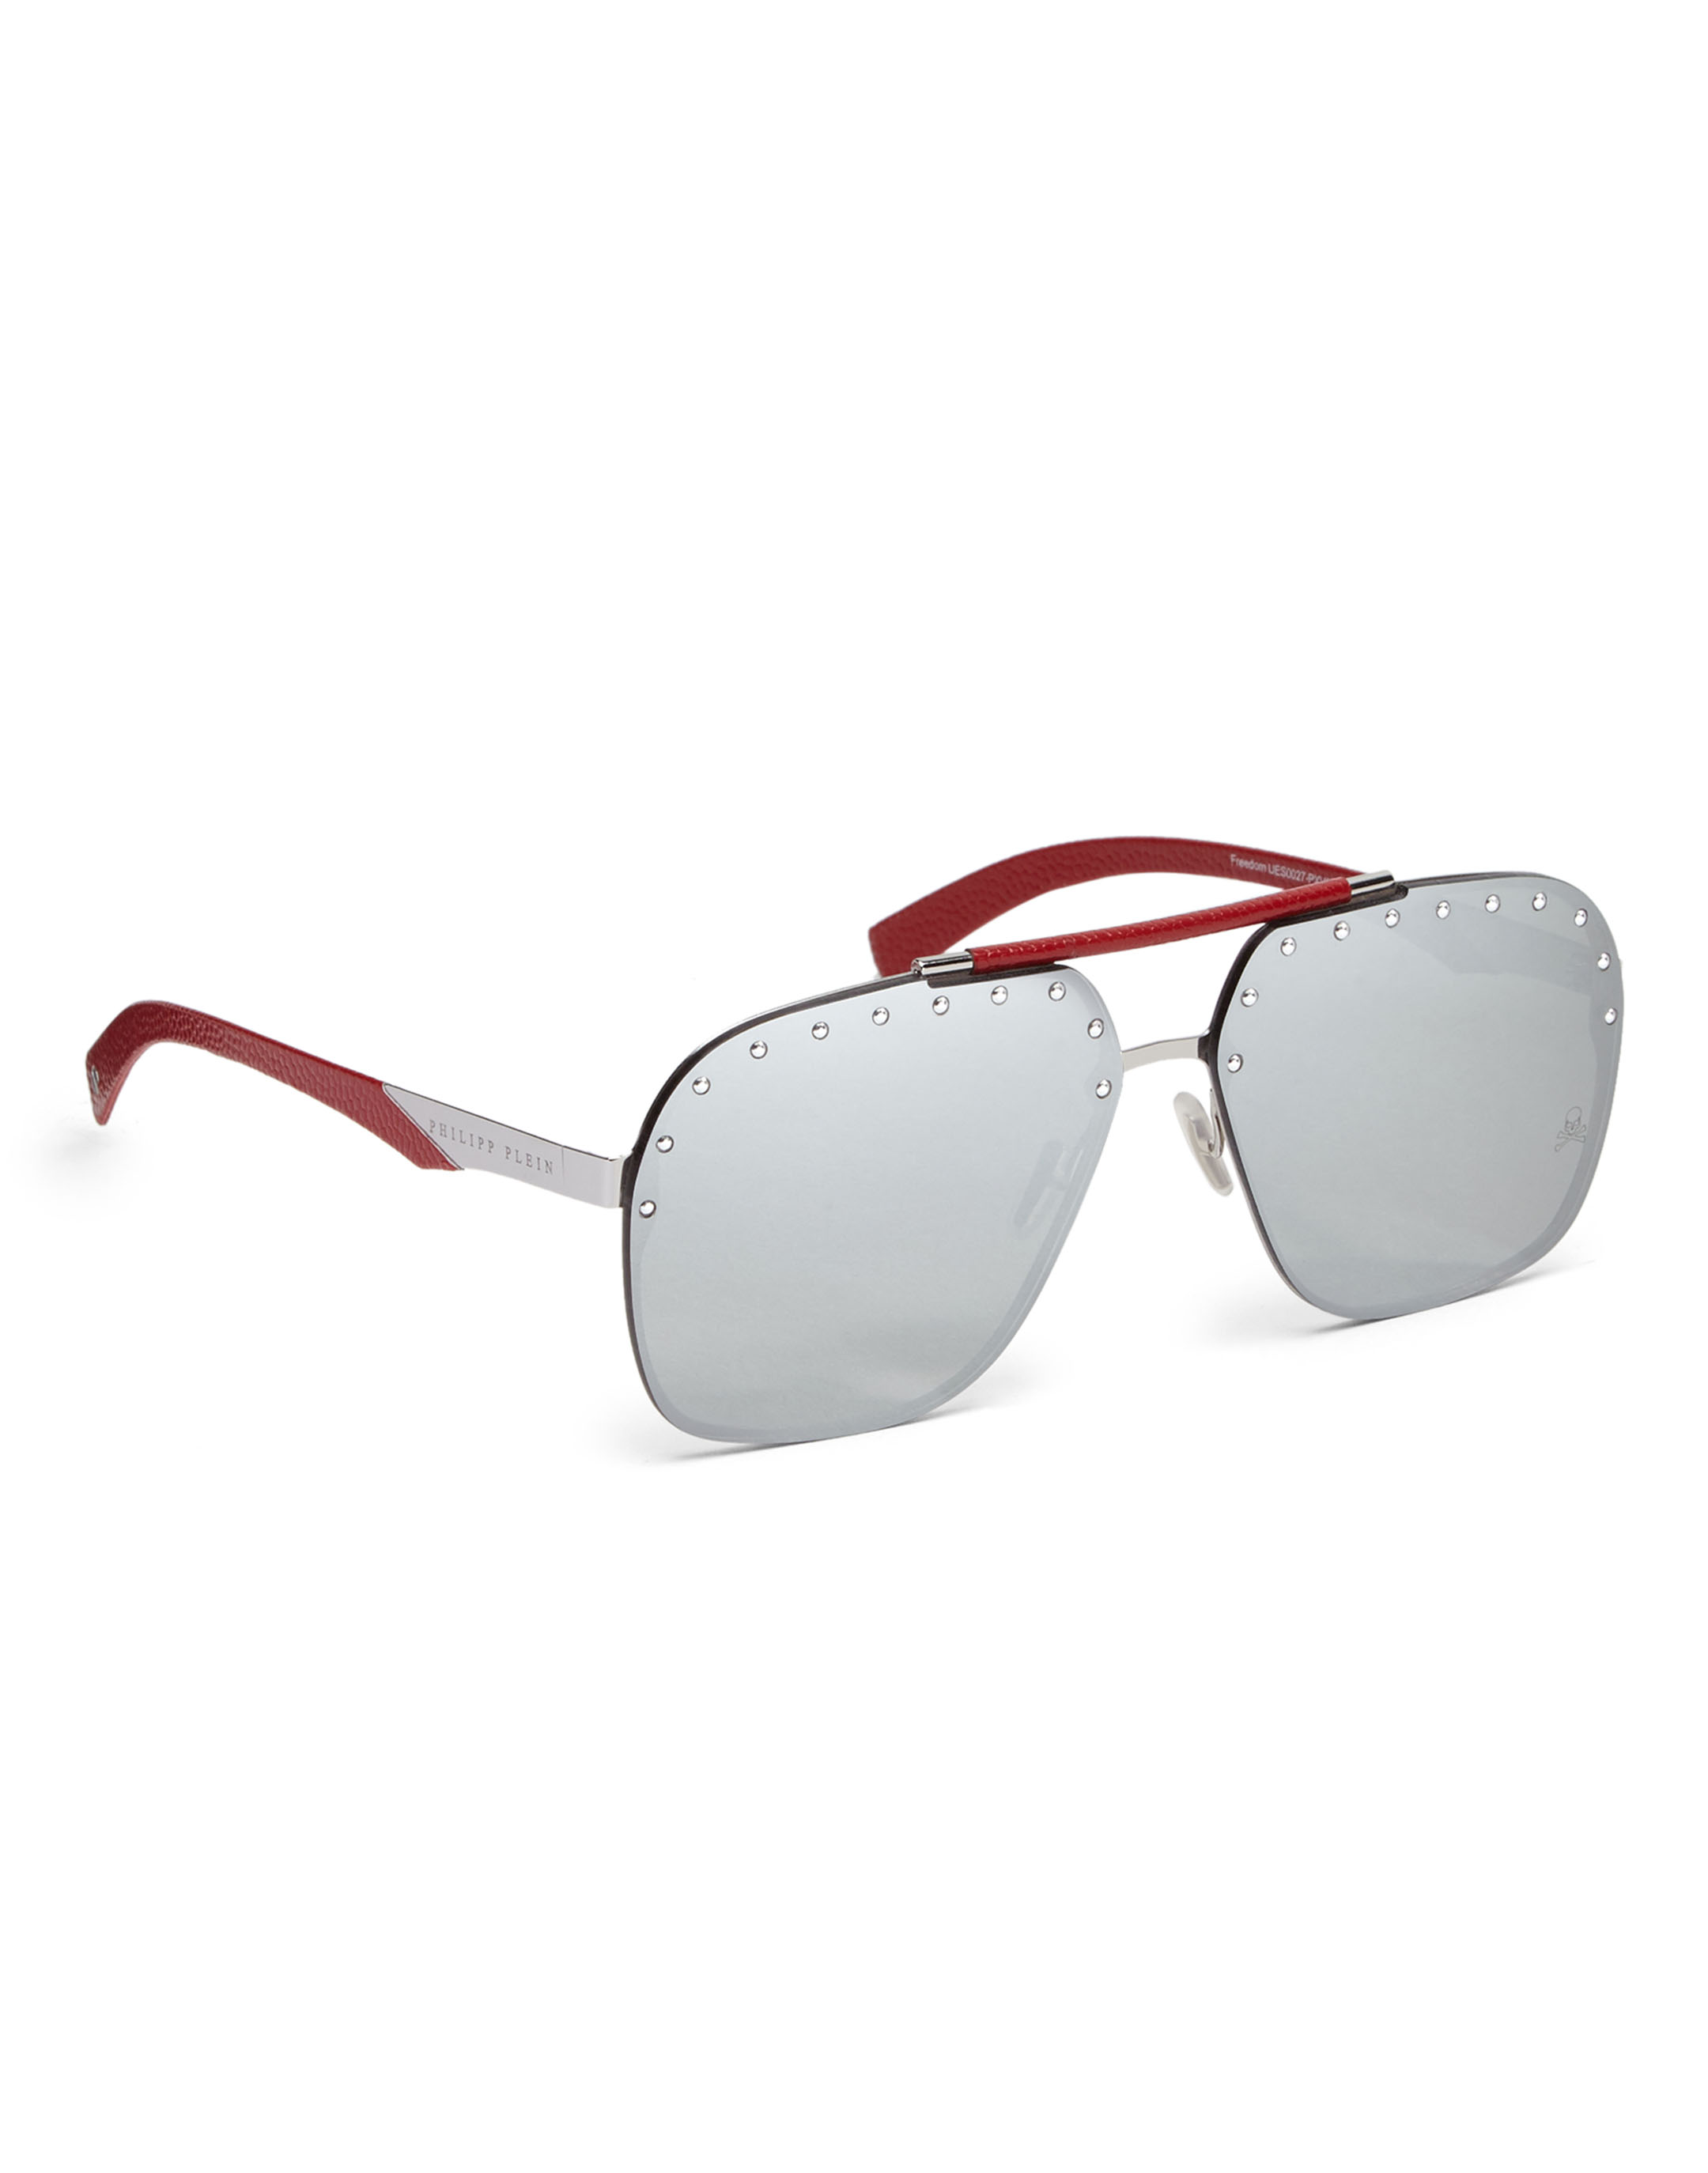 Sunglasses "Freedom studded" | Philipp Plein Outlet